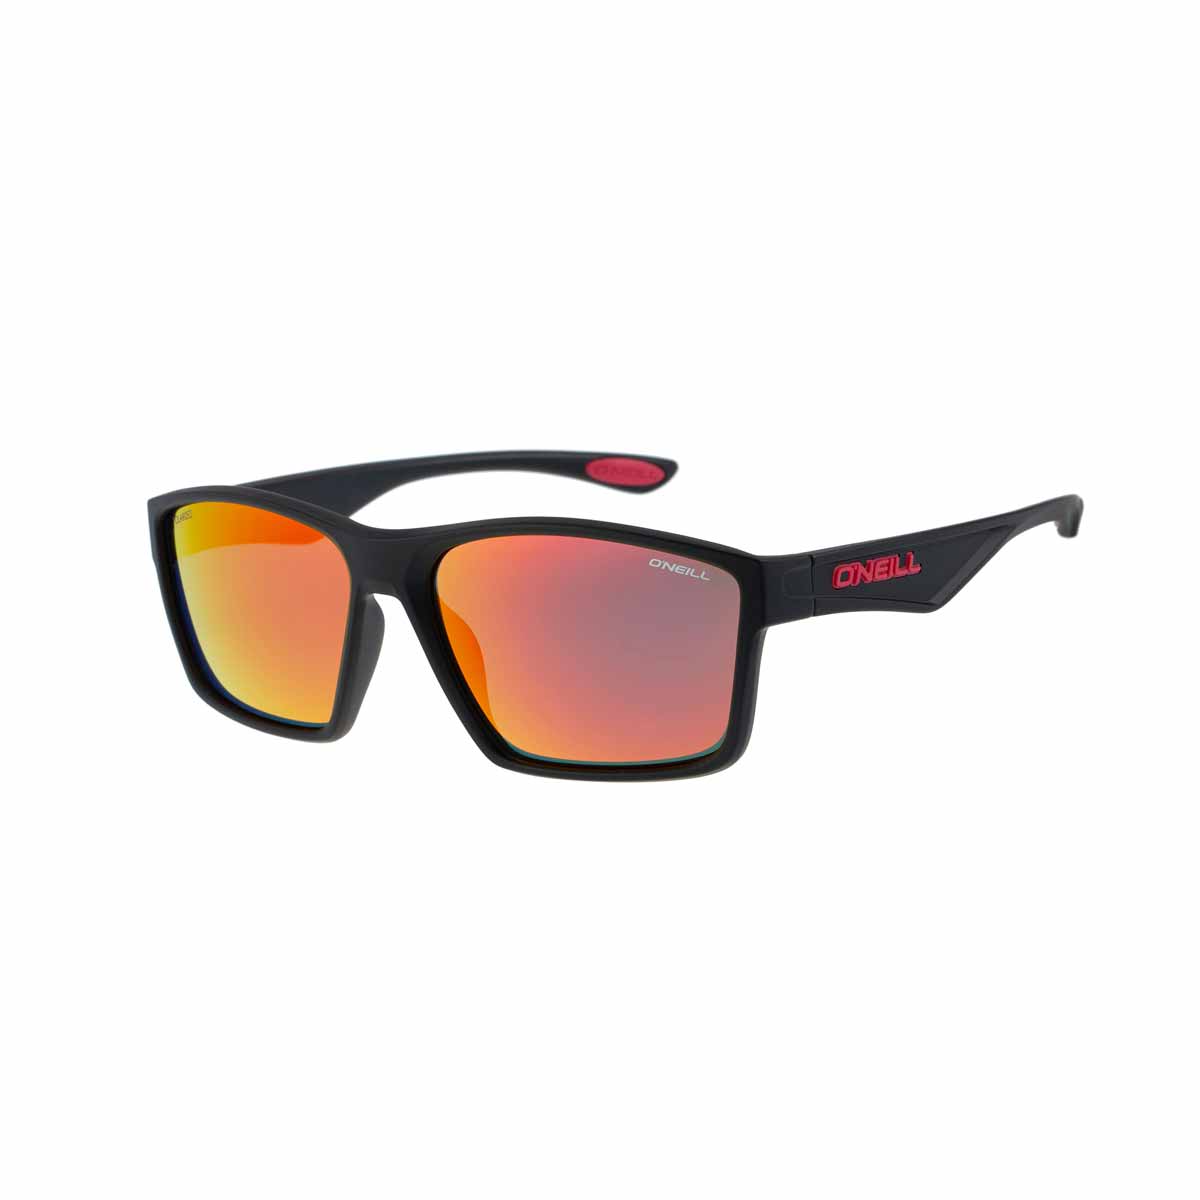 O'Neill 9024 2.0 Sunglasses – 104P Matte black / Red Red mirror